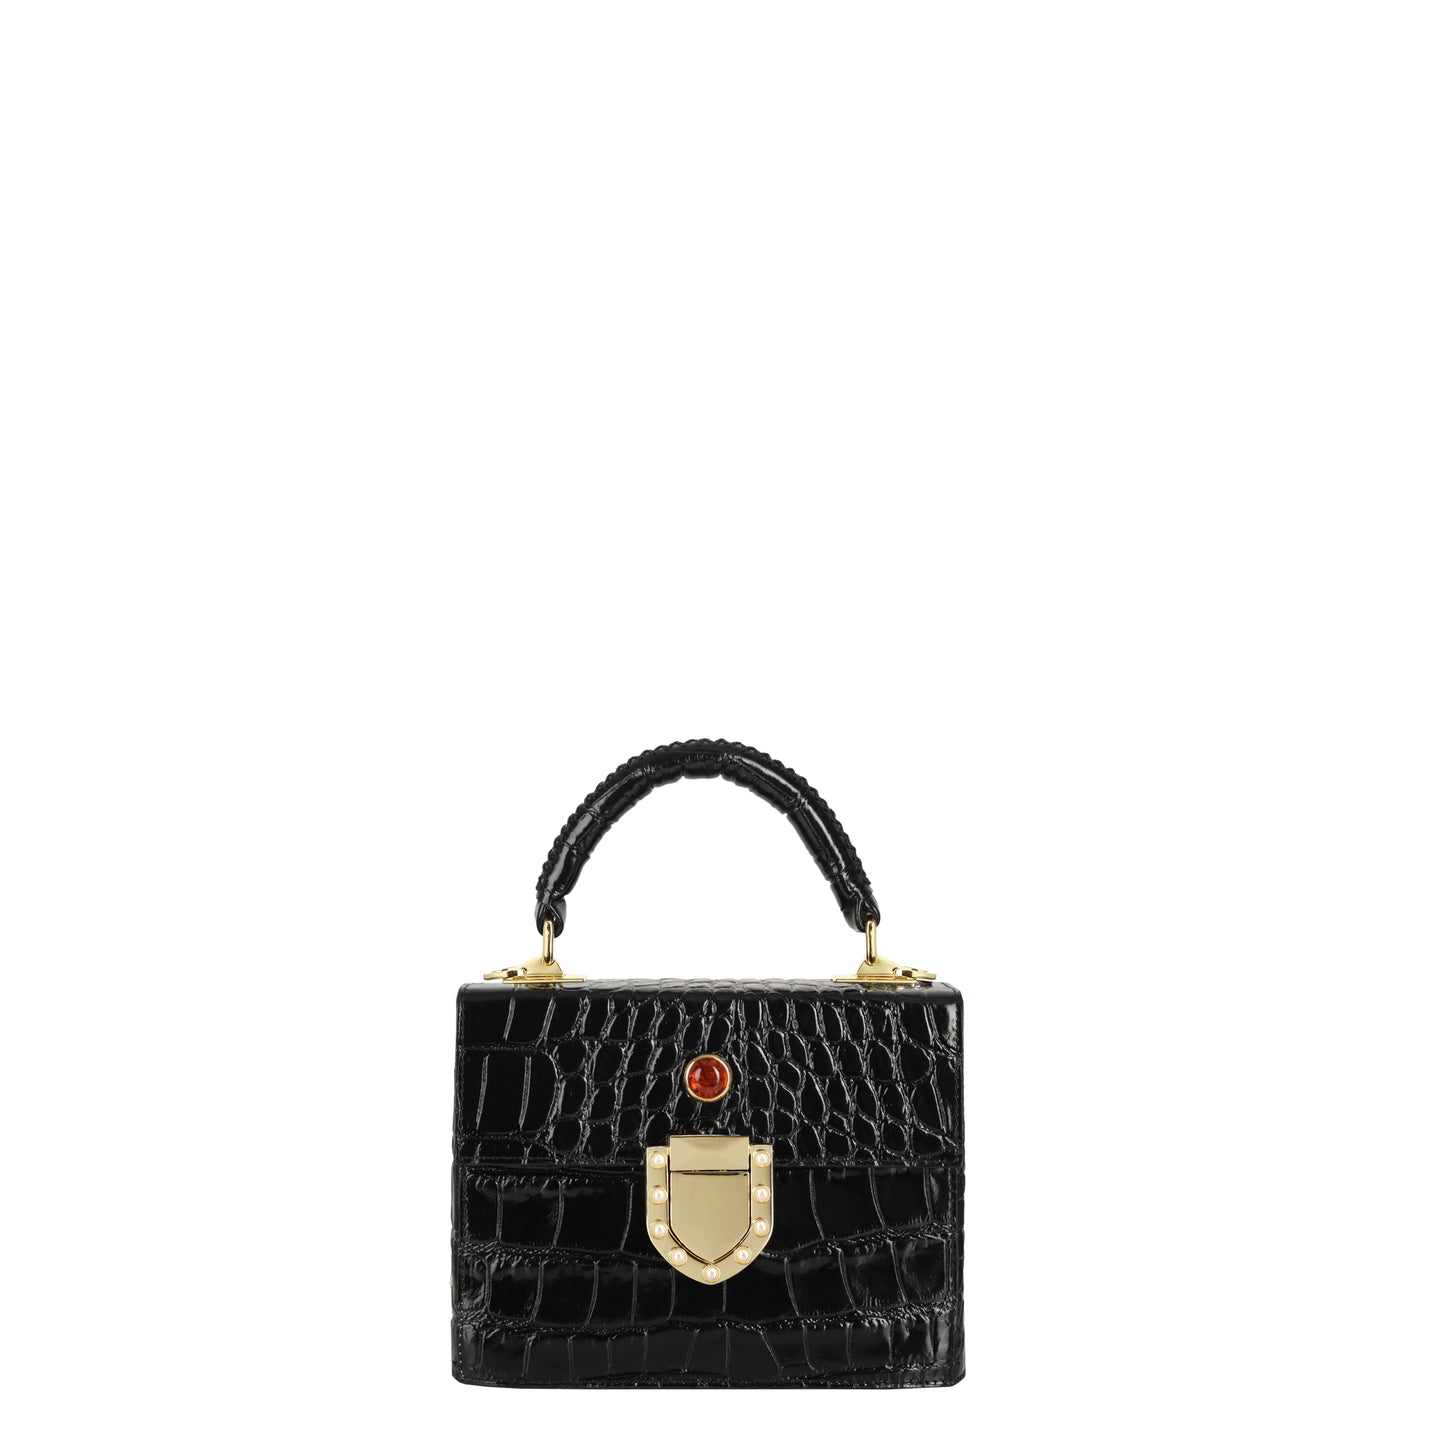 ALEXIS mini croco black leather women's handbag